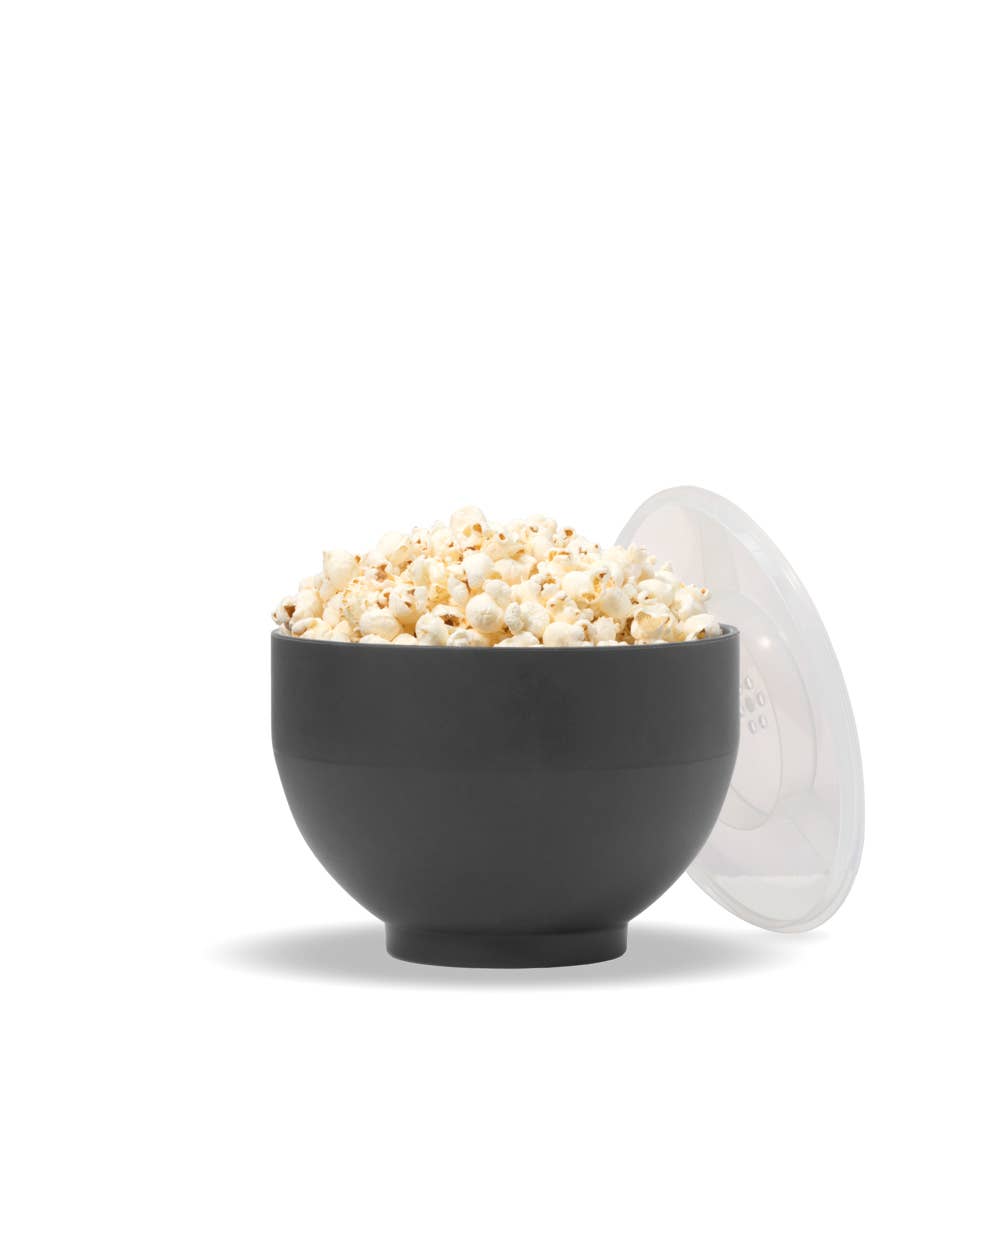 The Popcorn Popper